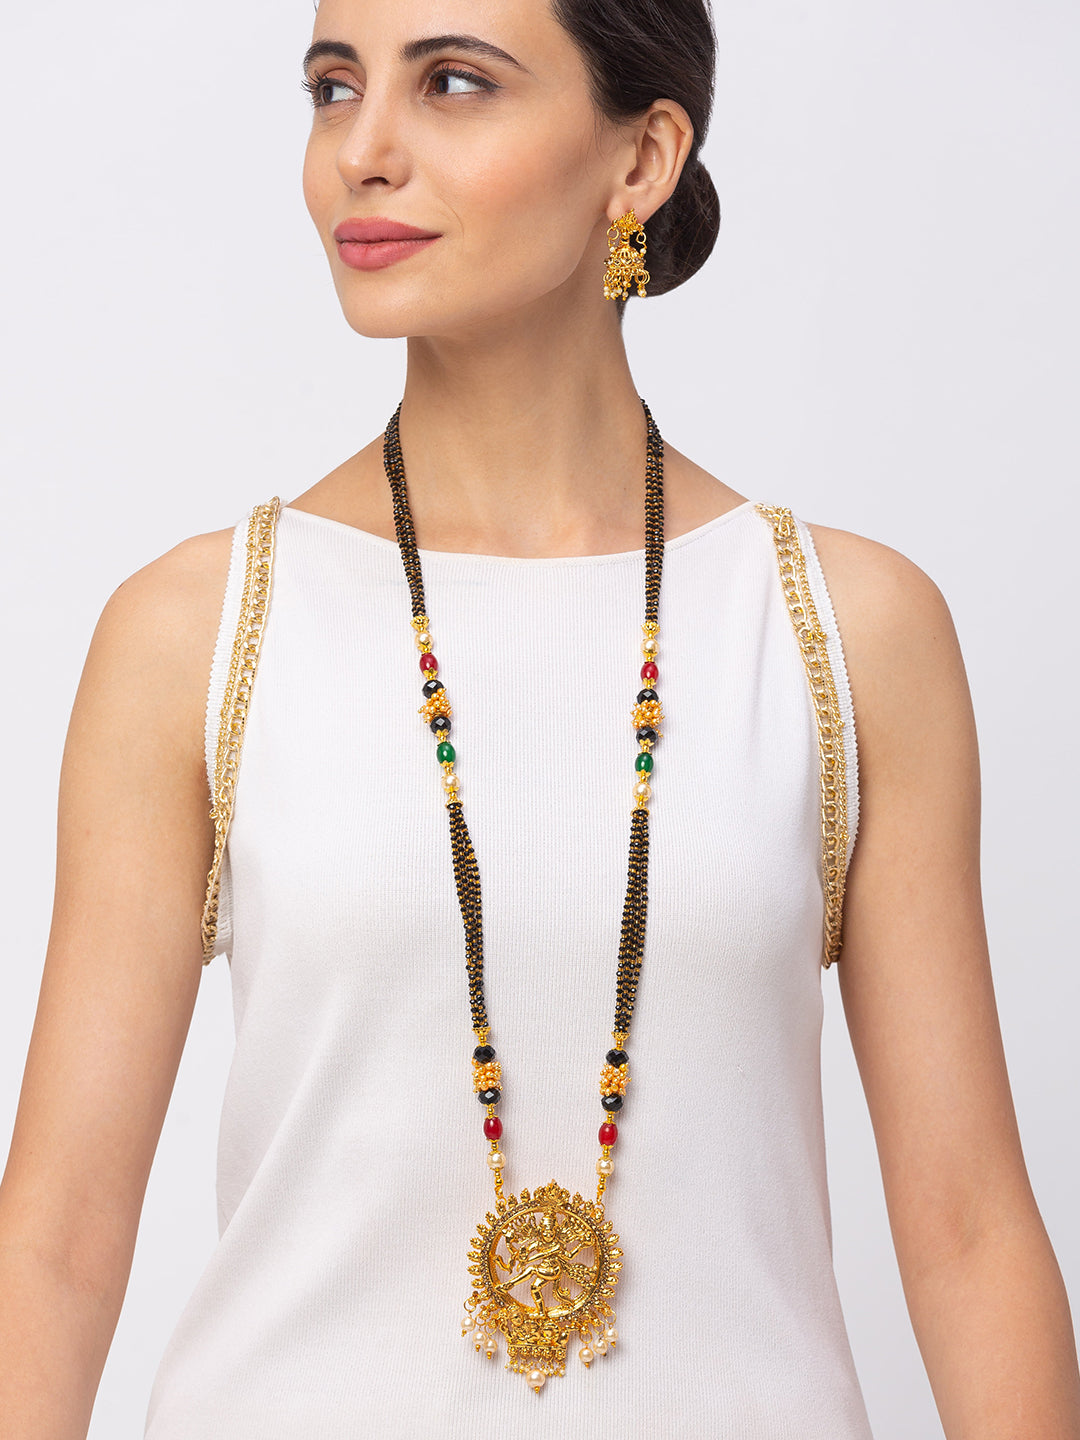 Gold Long Mangalsutra | Black beads mangalsutra design, Gold earrings  models, Black beaded jewelry